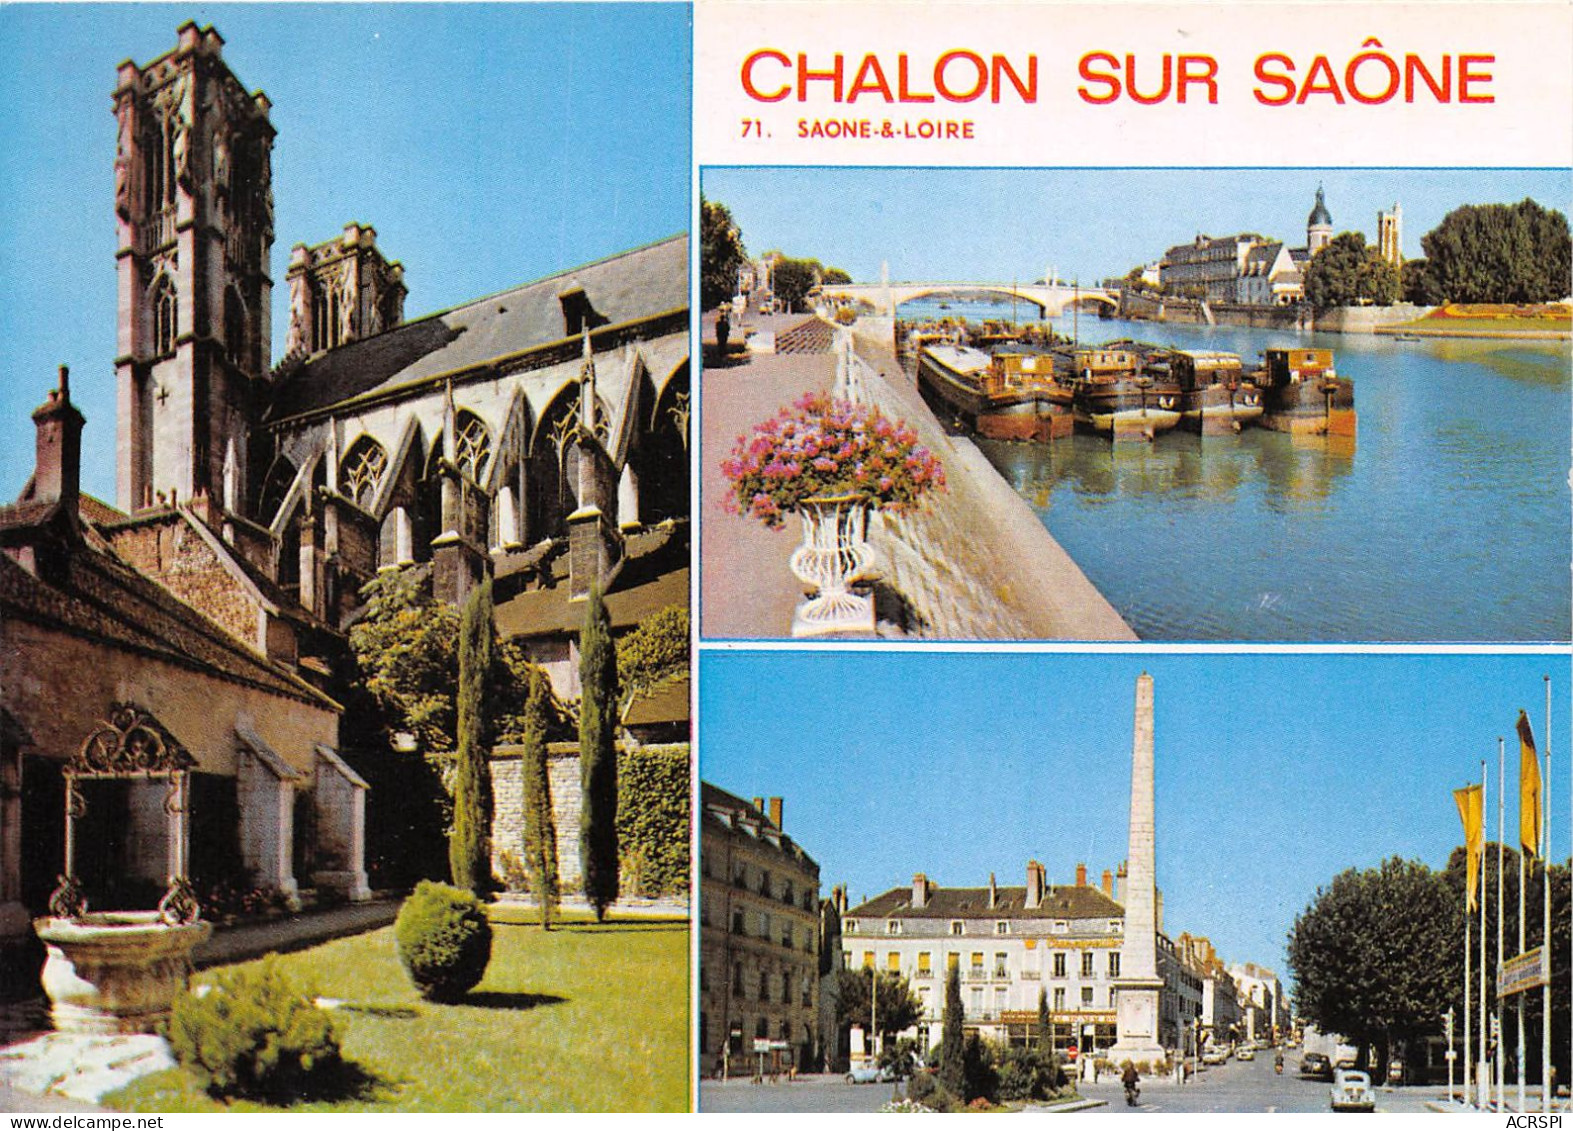 CHALON SUR SAONE 6(scan Recto-verso) MA2241 - Chalon Sur Saone